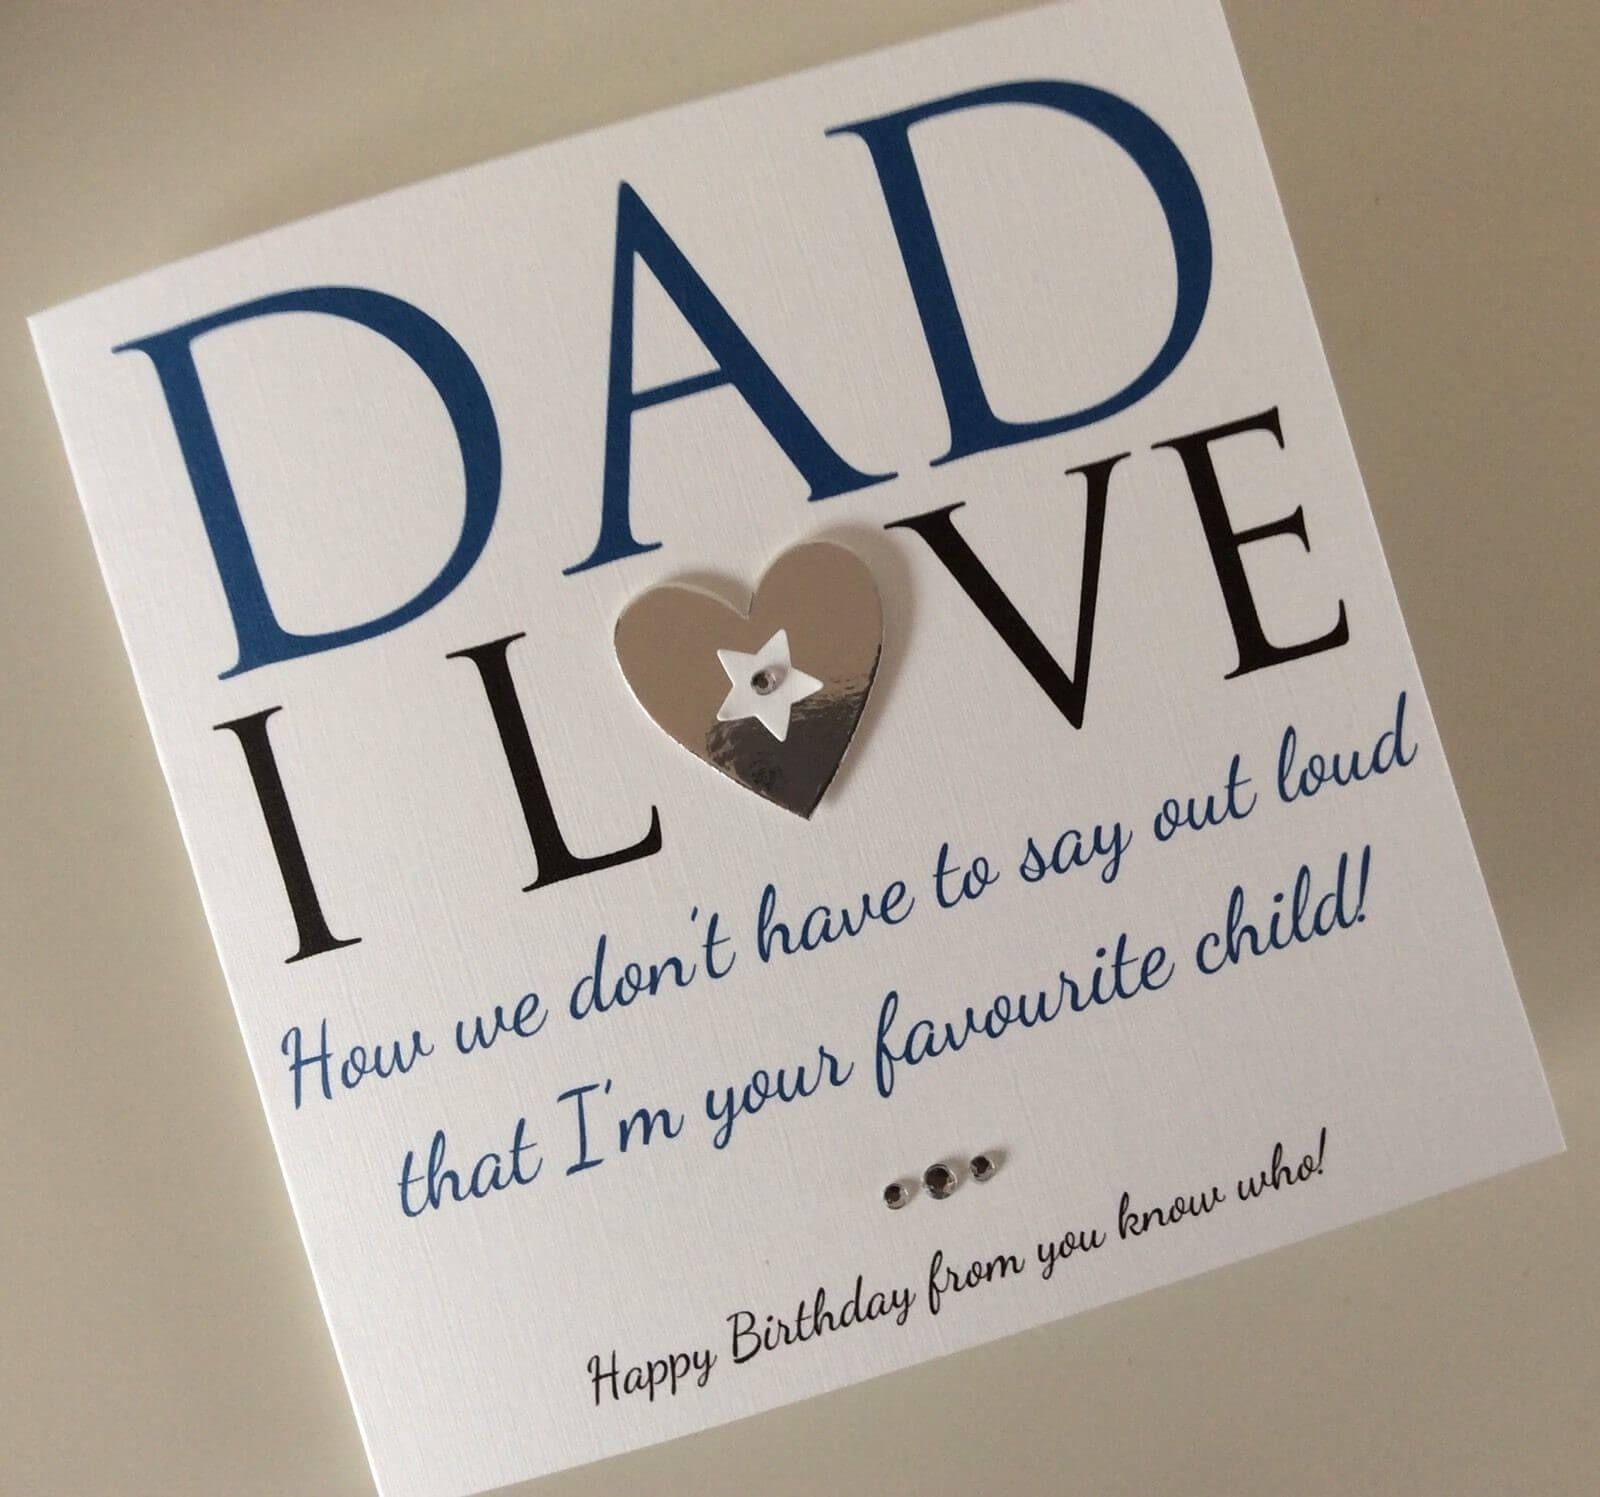 Happy Birthday Homemade Card Ideas Homemade Birthday Cards For Mom From Ba Happy Envelopes Dad